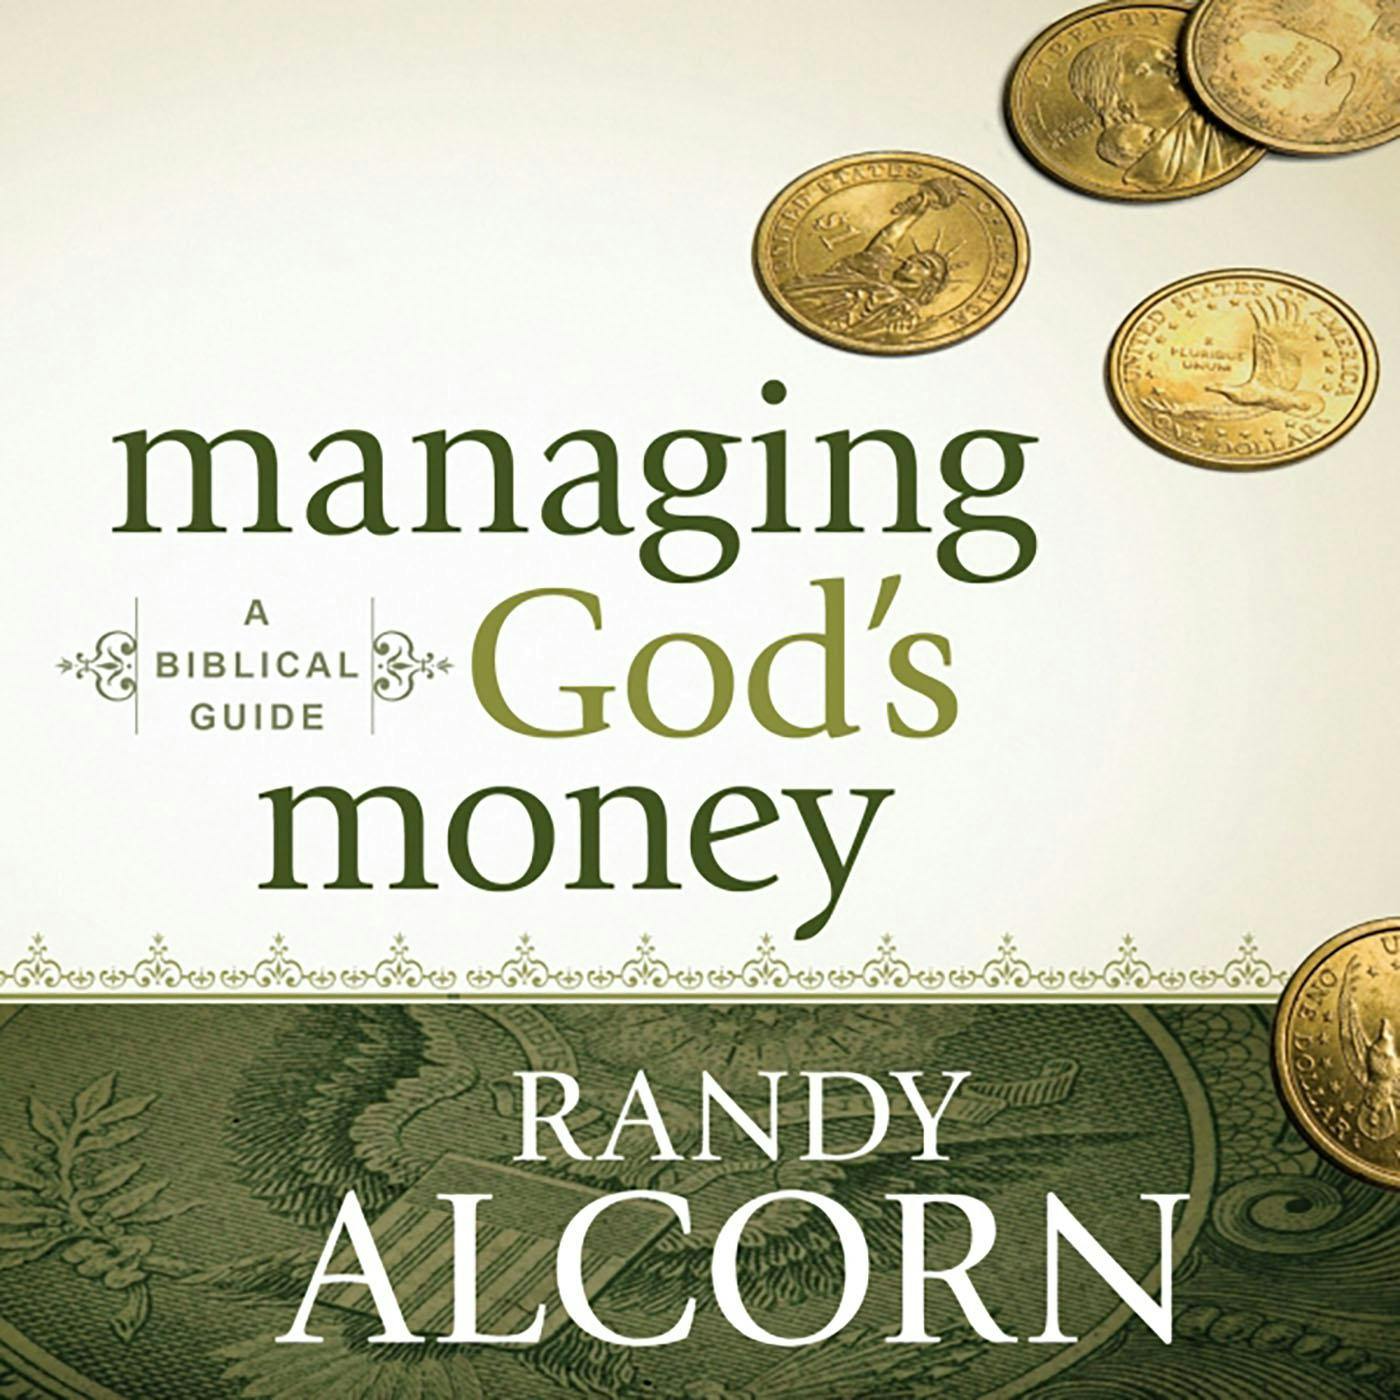 Managing God's Money: A Biblical Guide - Randy Alcorn